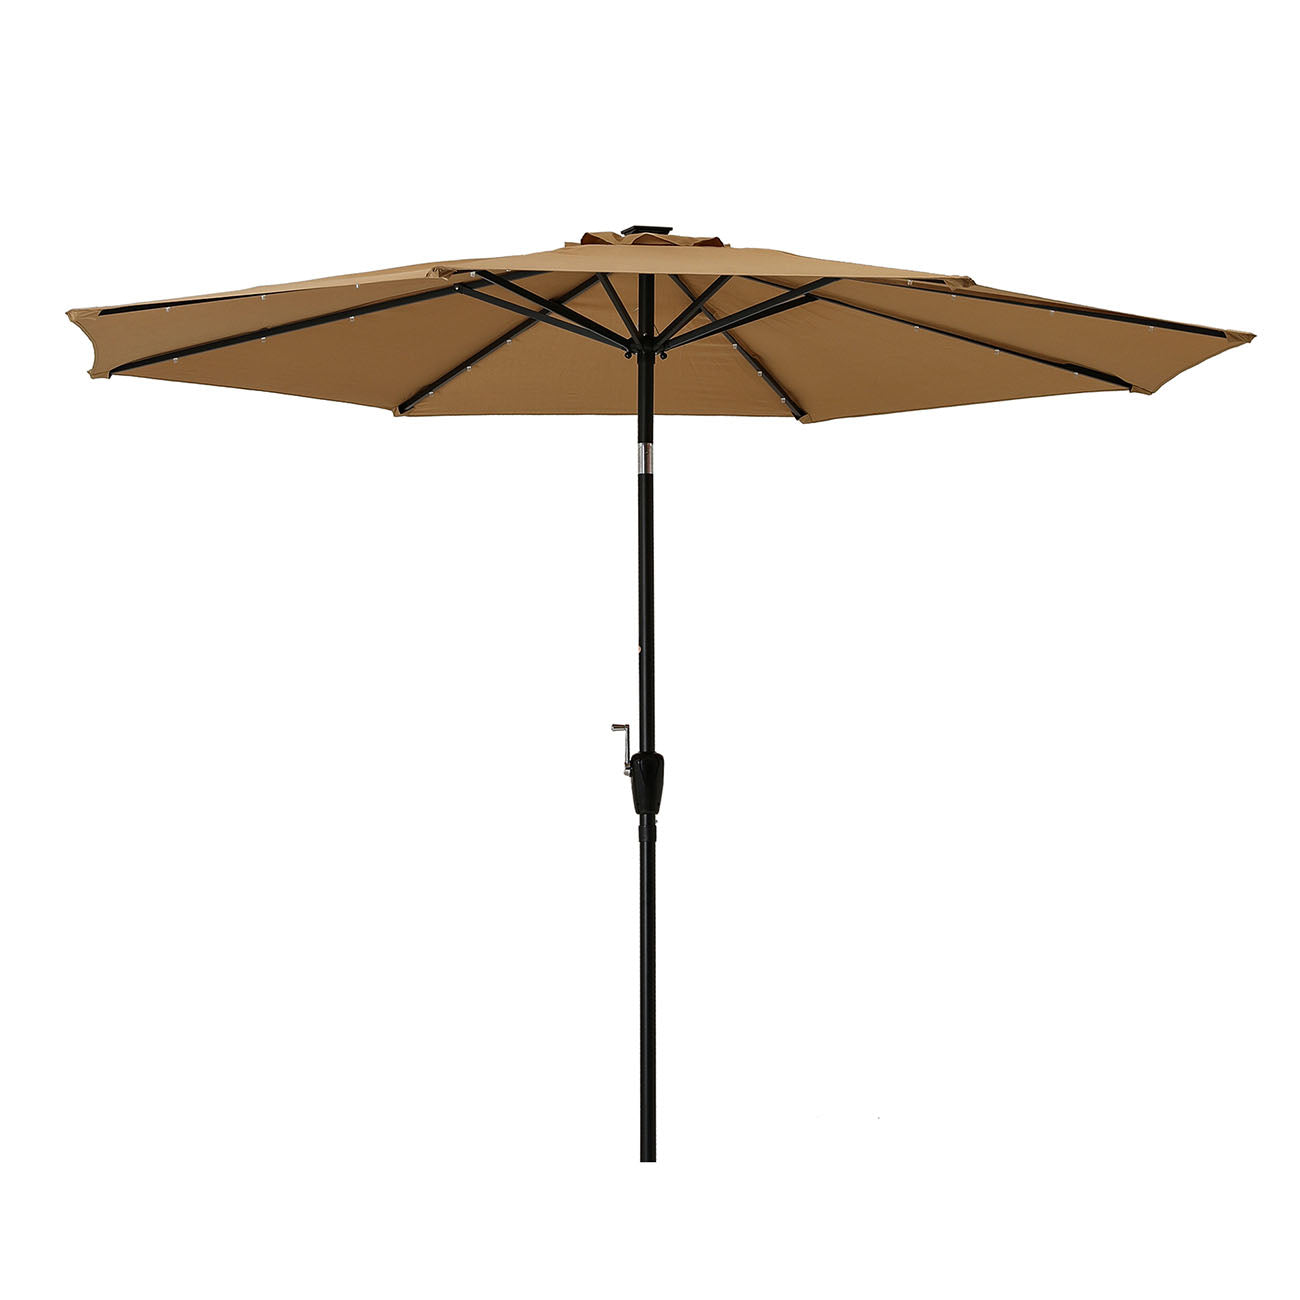 Boyel Living 10-ft Patio Umbrella with LED Lights (Tan)-Boyel Living